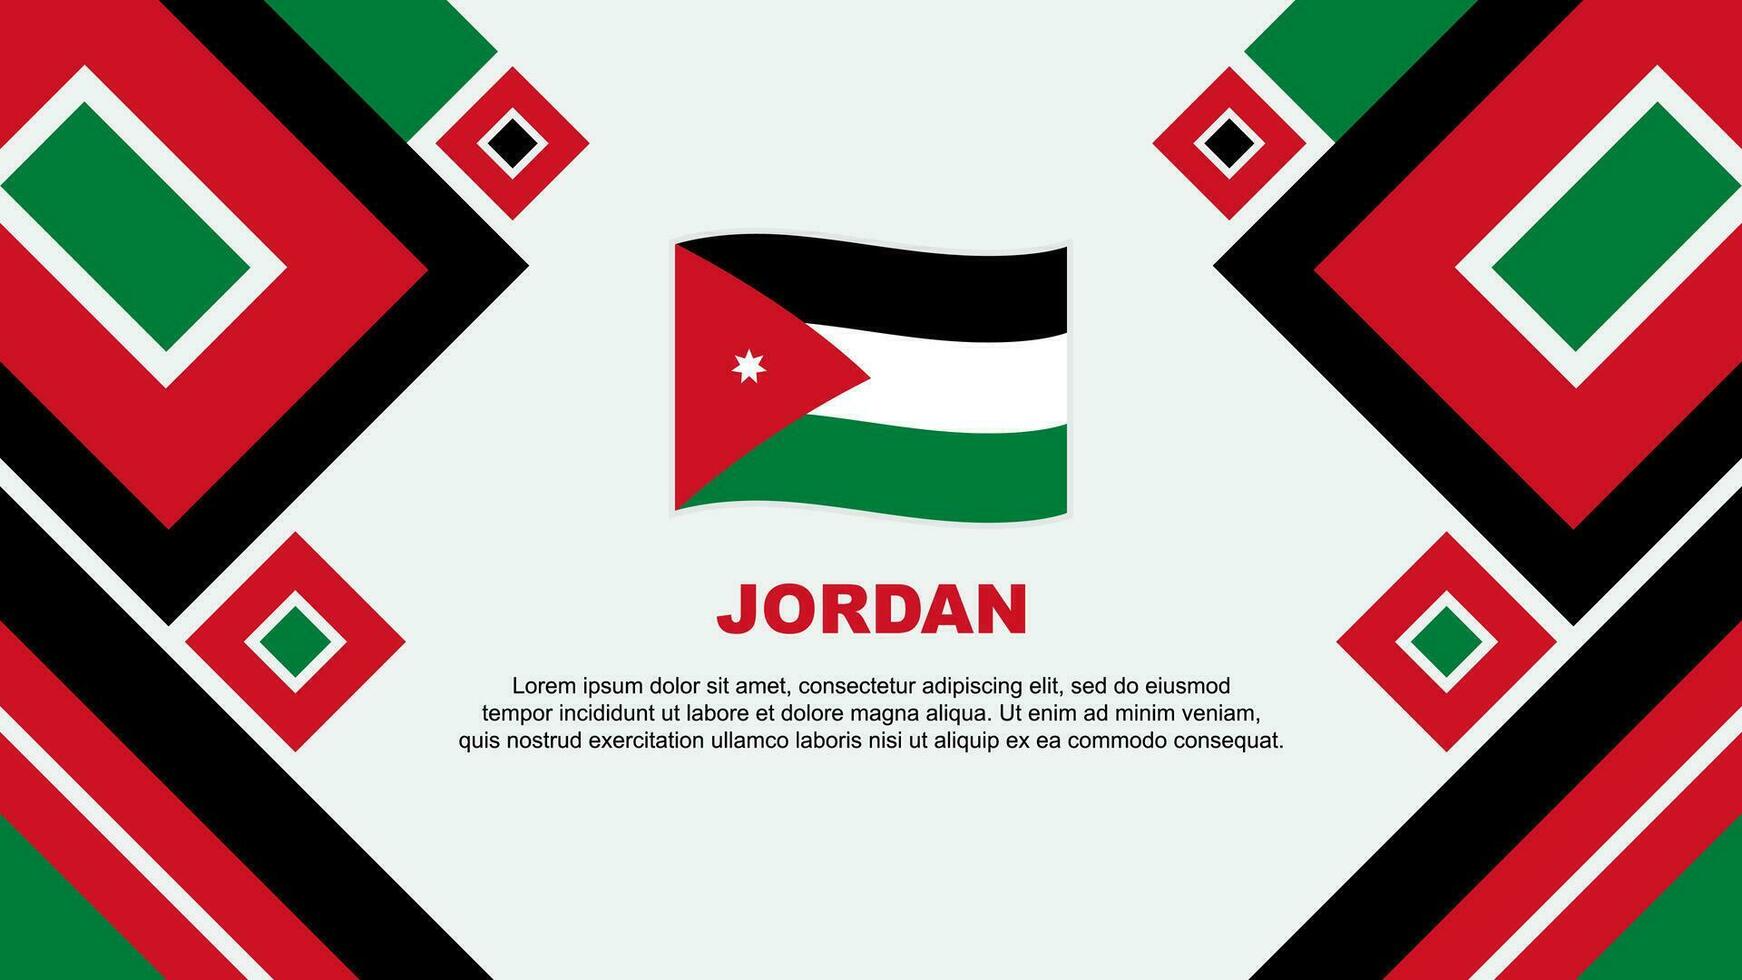 Jordan Flag Abstract Background Design Template. Jordan Independence Day Banner Wallpaper Vector Illustration. Jordan Cartoon